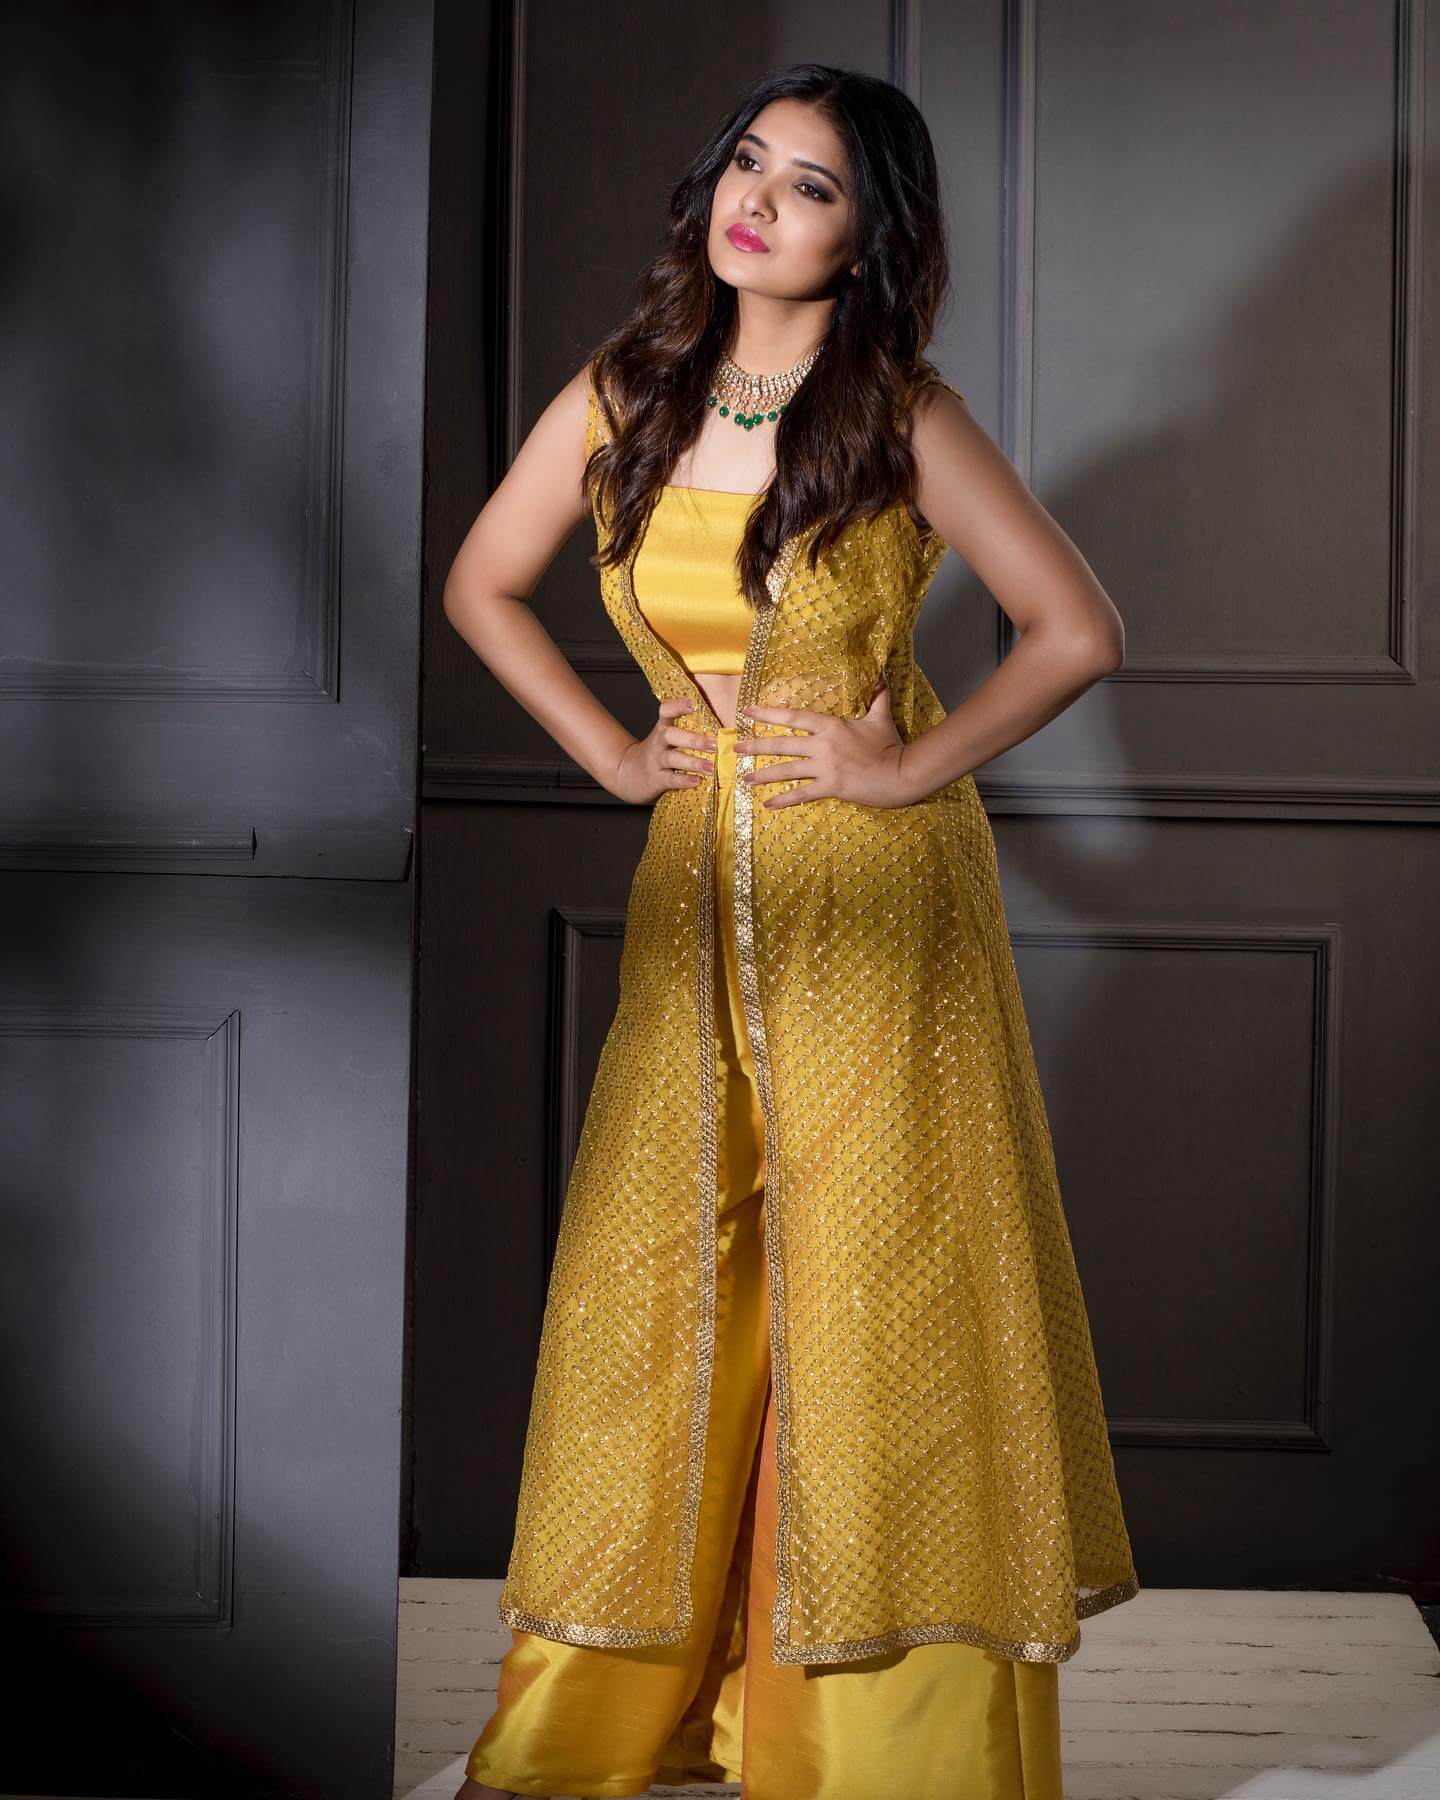 Vani Bhoja In Yellow Co-Ord Indo Western Dress Perfect Festive Look